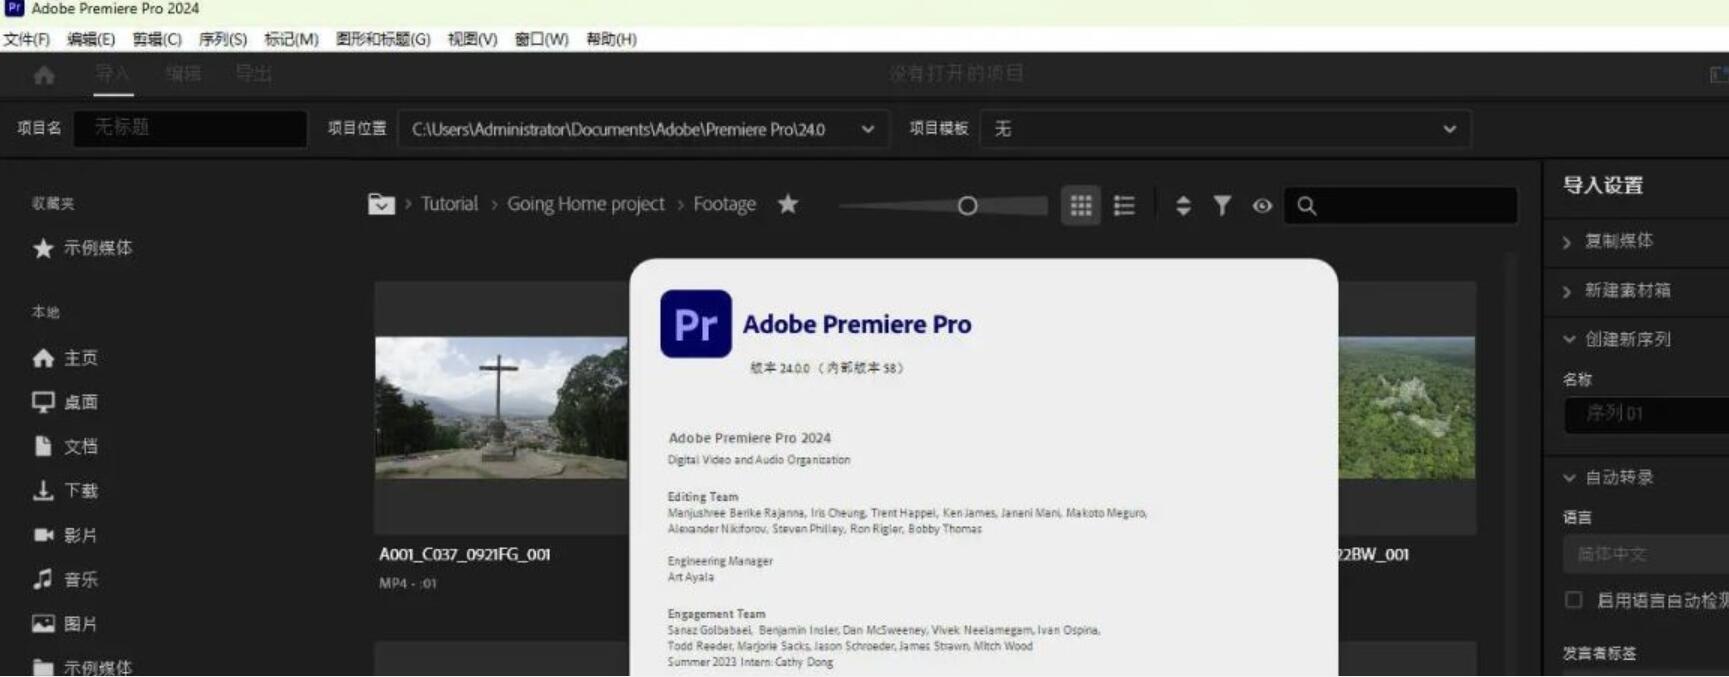 Adobe Premiere Pro 2024 v24.0.3.2 (x64)  绿色便携中文精简版